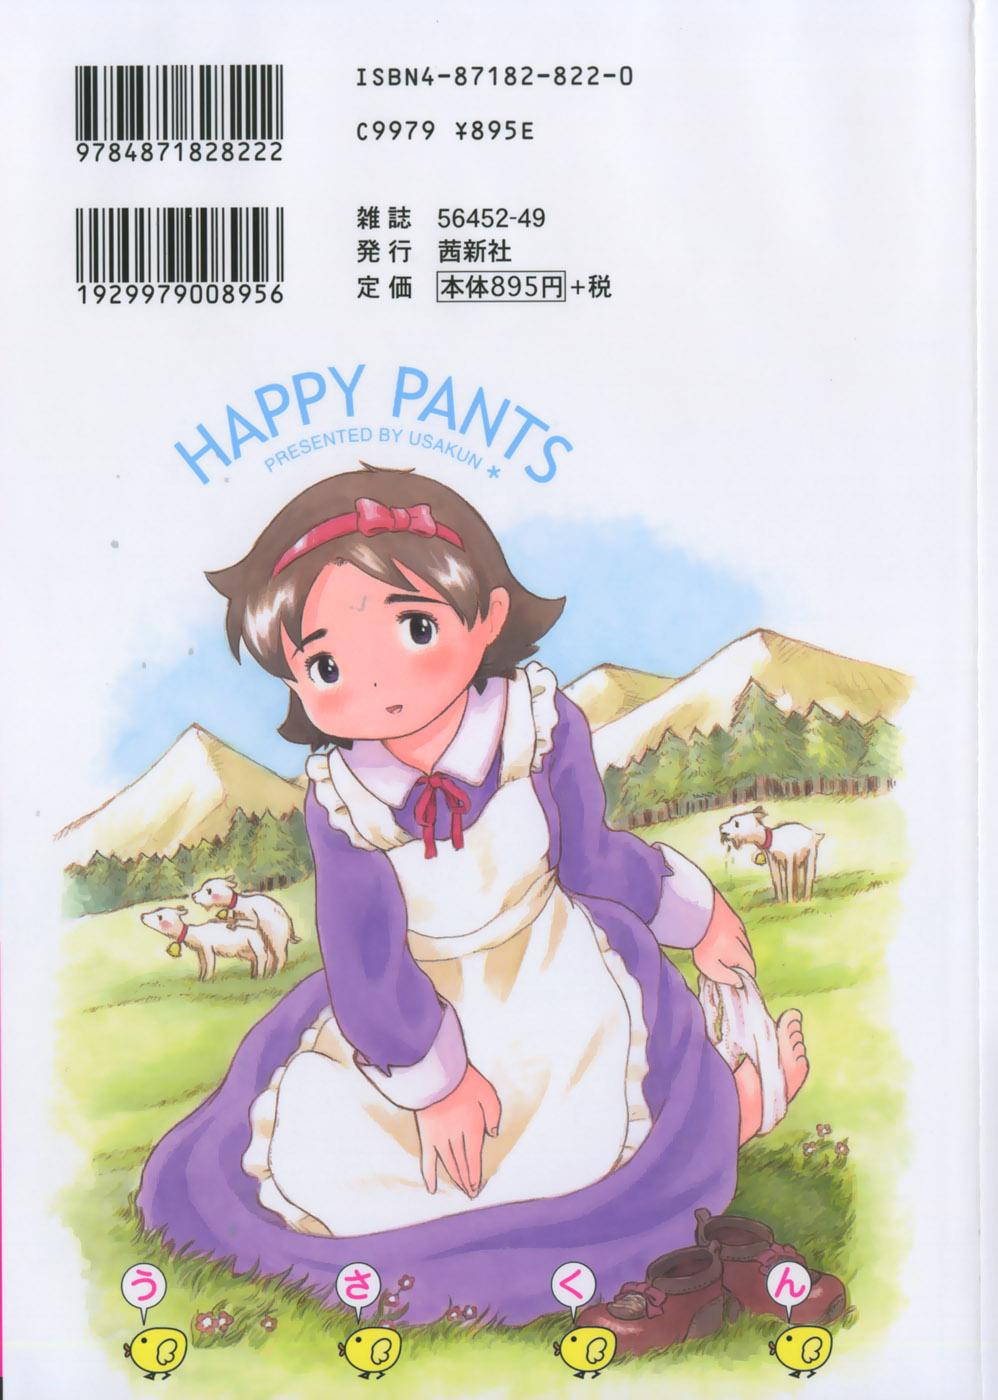 Shiawase Pants - Happy Pants 1